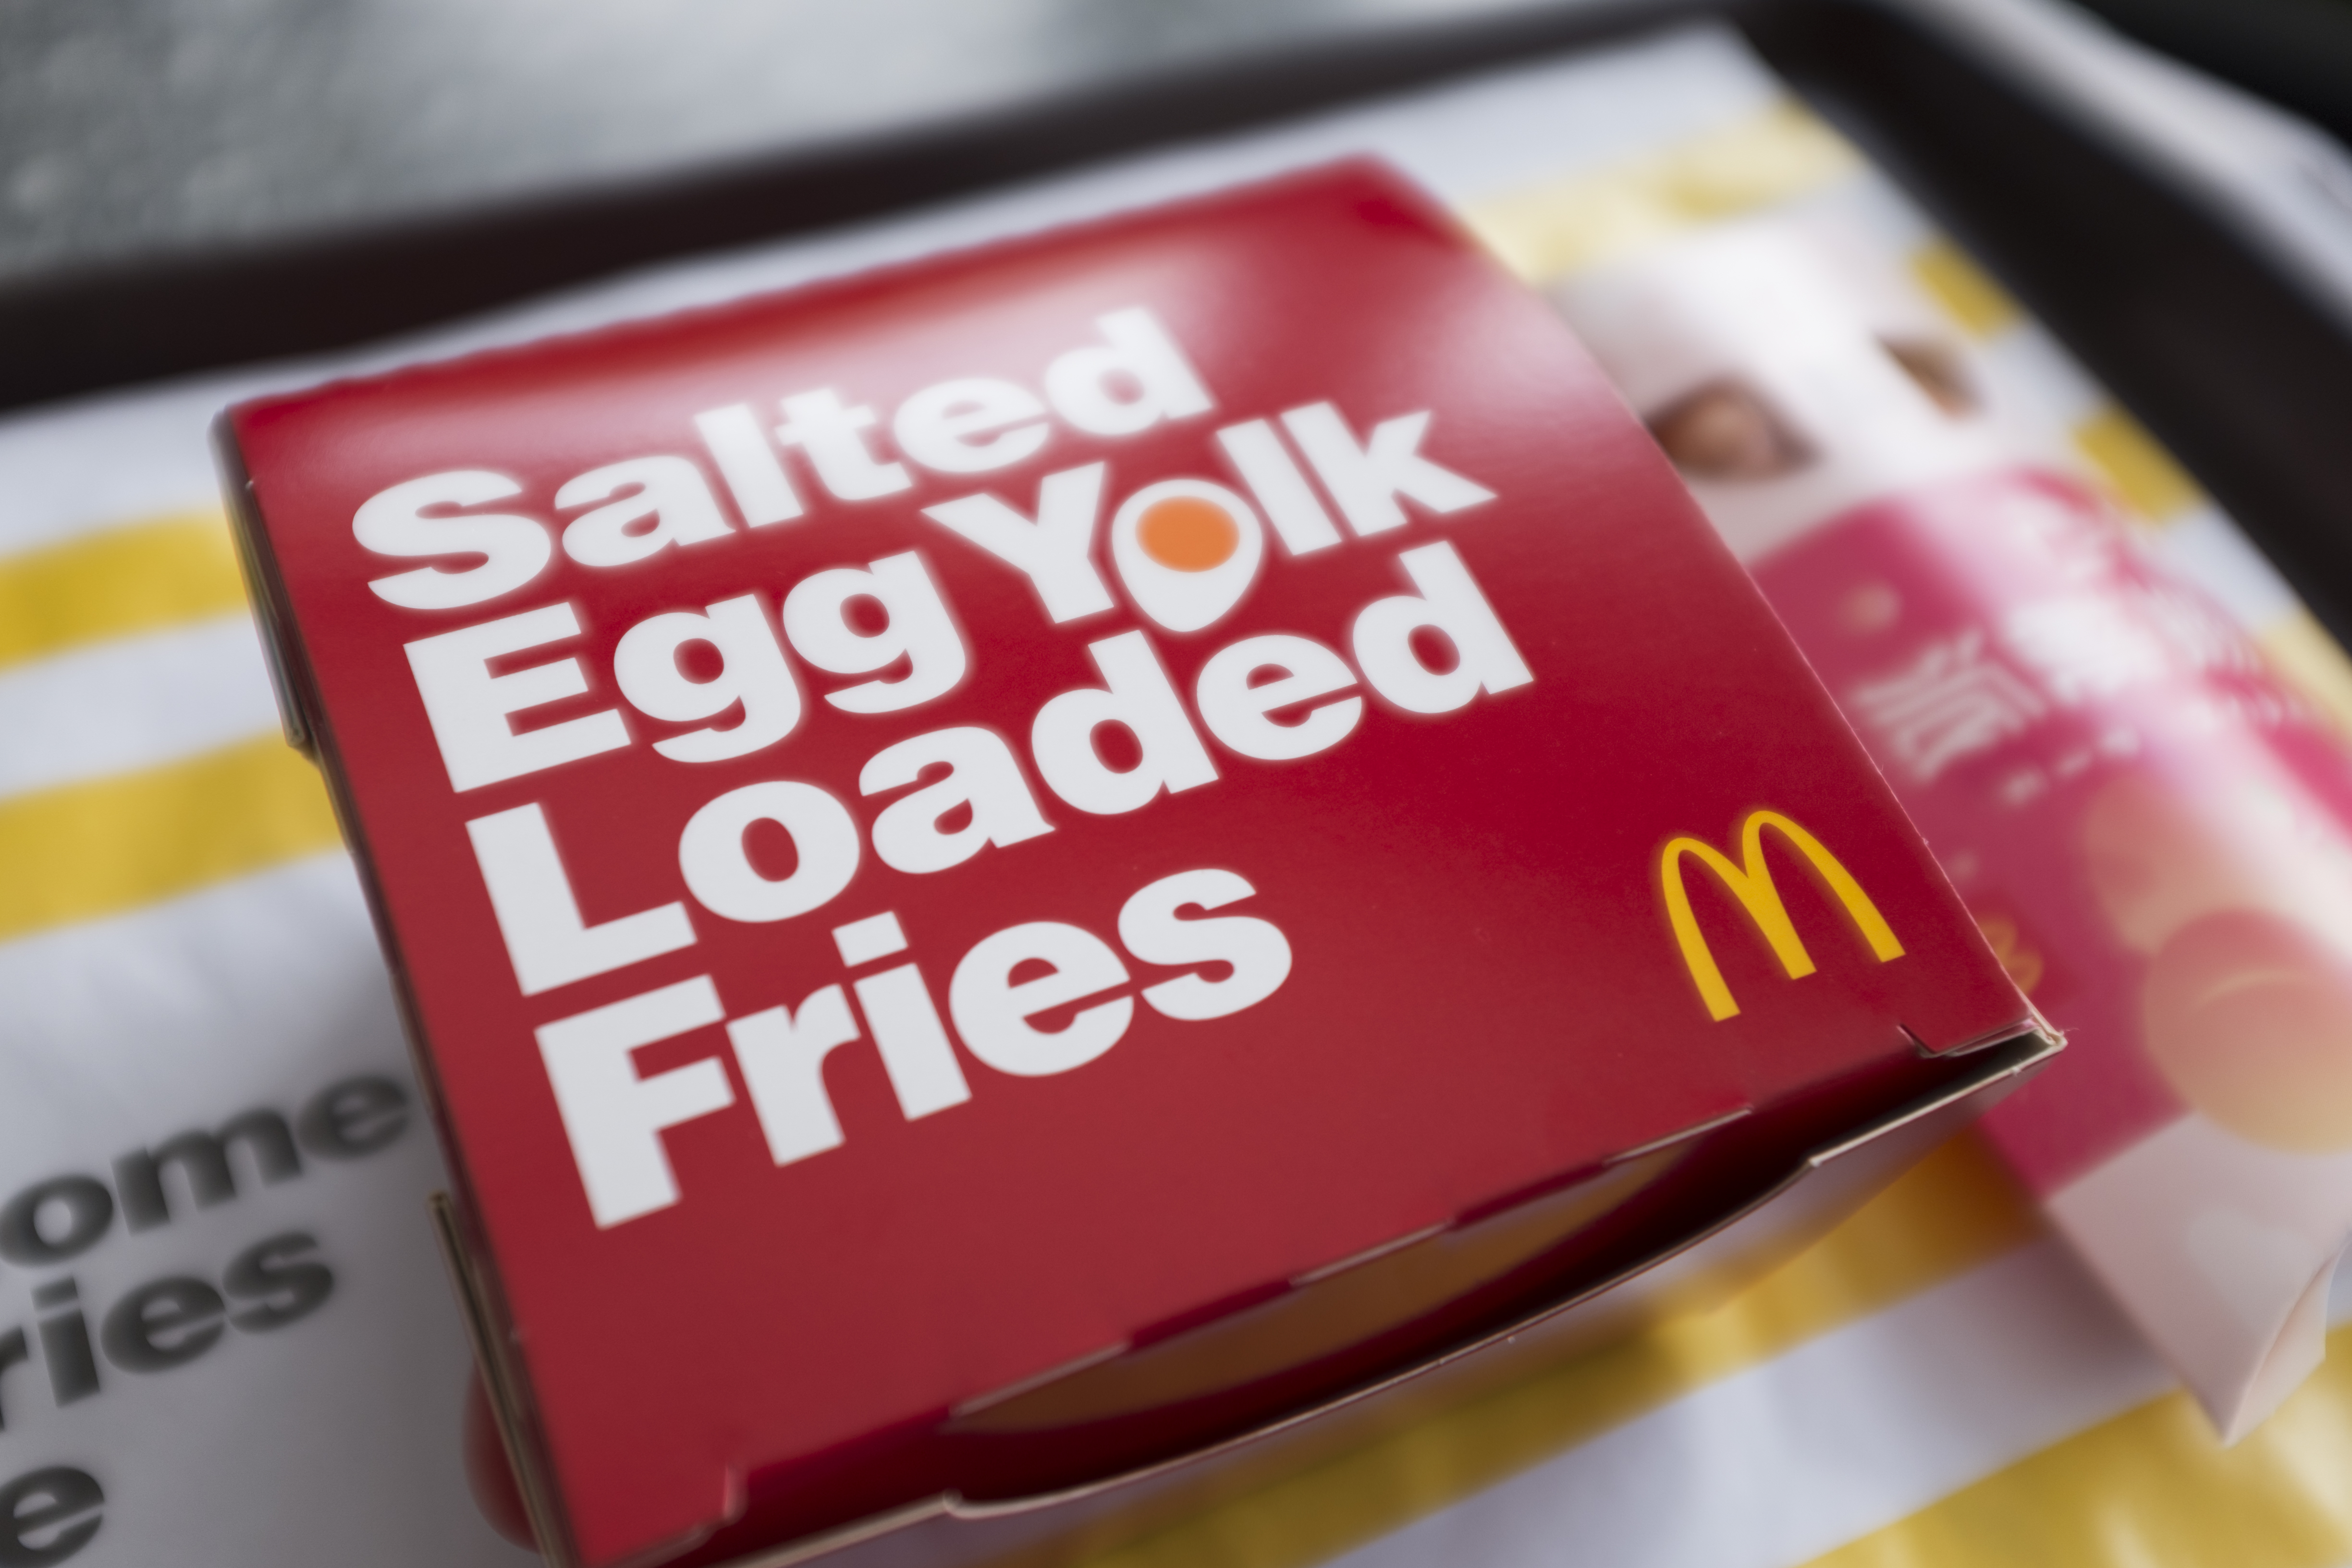 Macdonalds_Salted Egg Yolk Fries_2